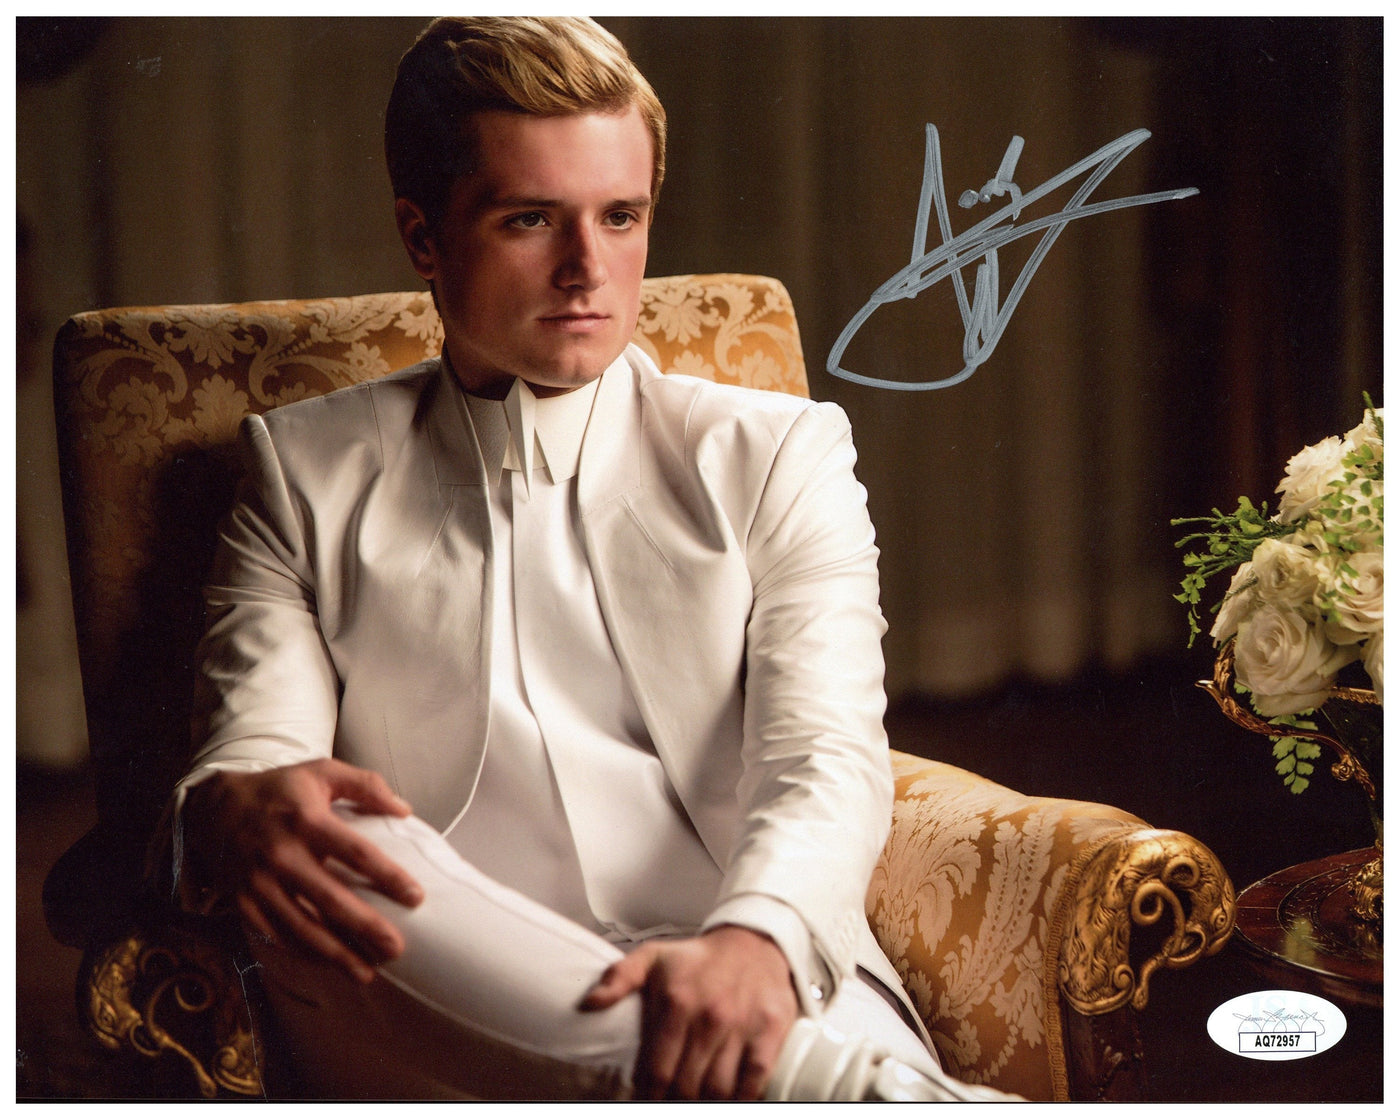 Josh Hutcherson Signed 8x10 Photo The Hunger Games Peeta Mellark Autographed JSA